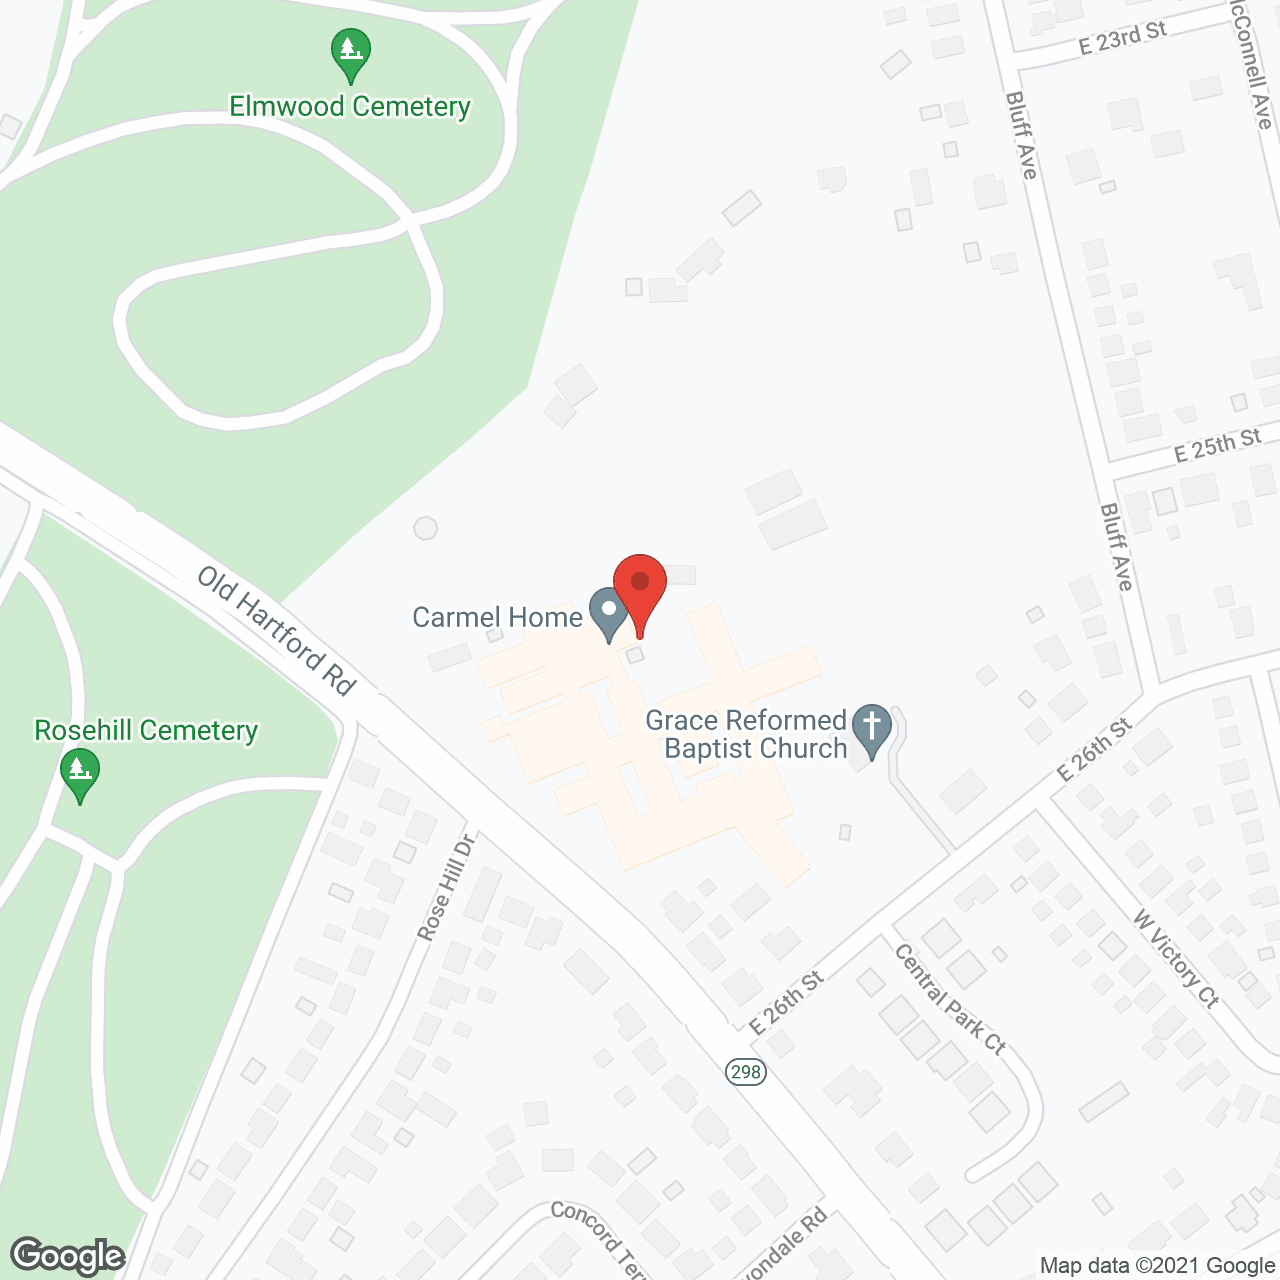 Carmel Home in google map